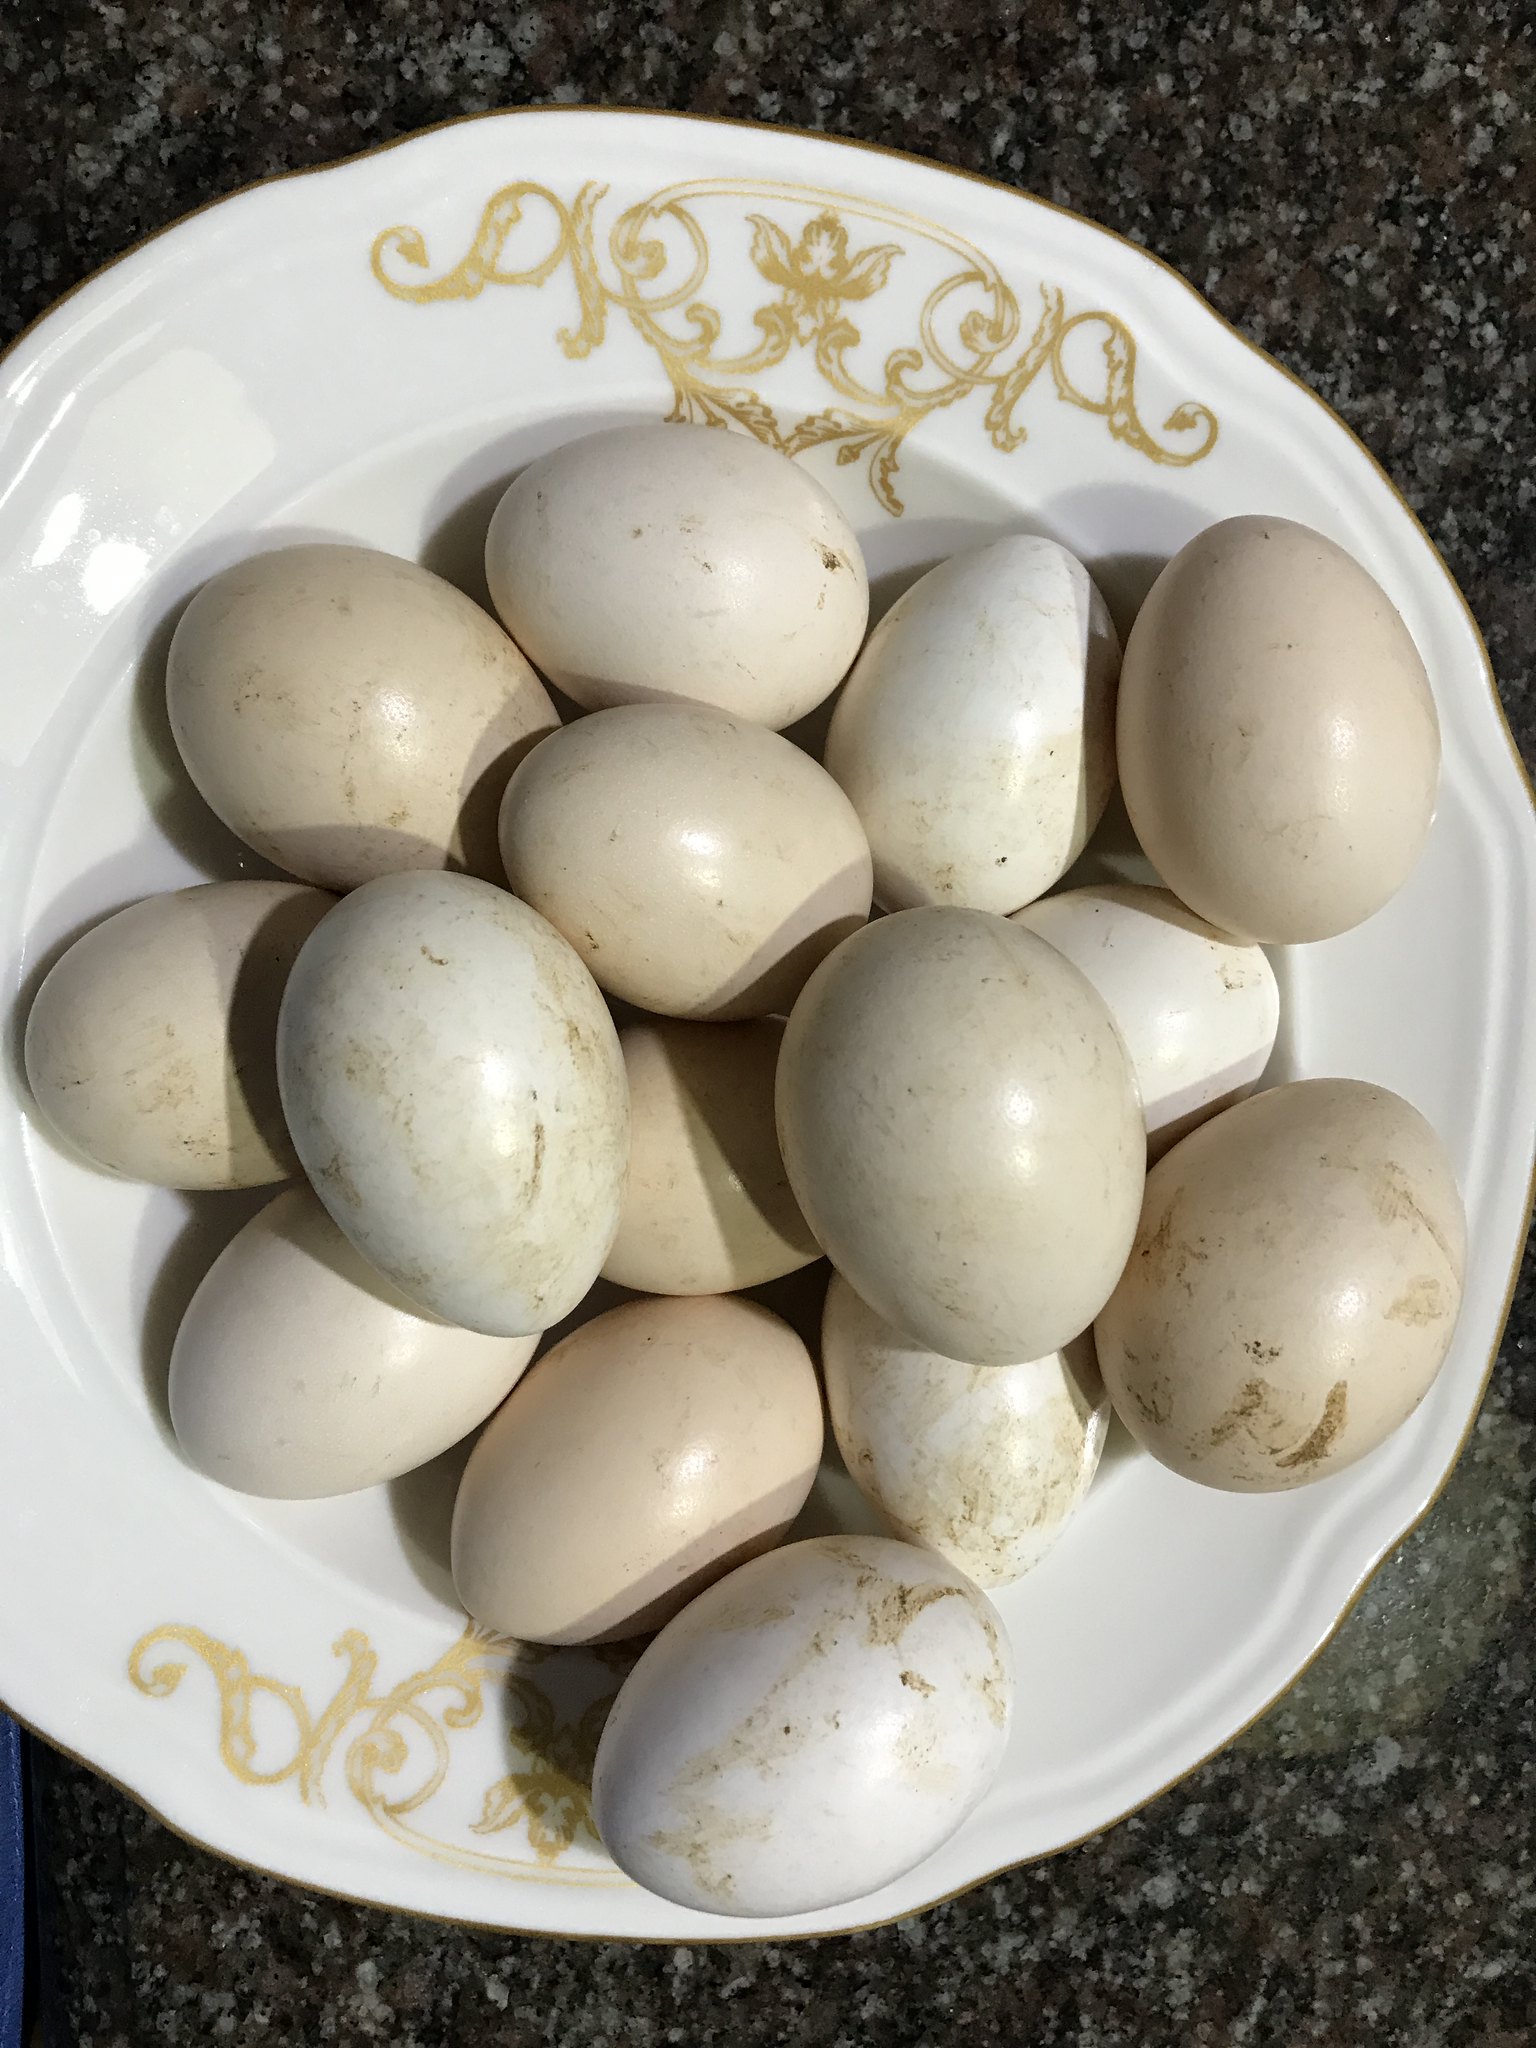 Native eggs July 15 2018 042